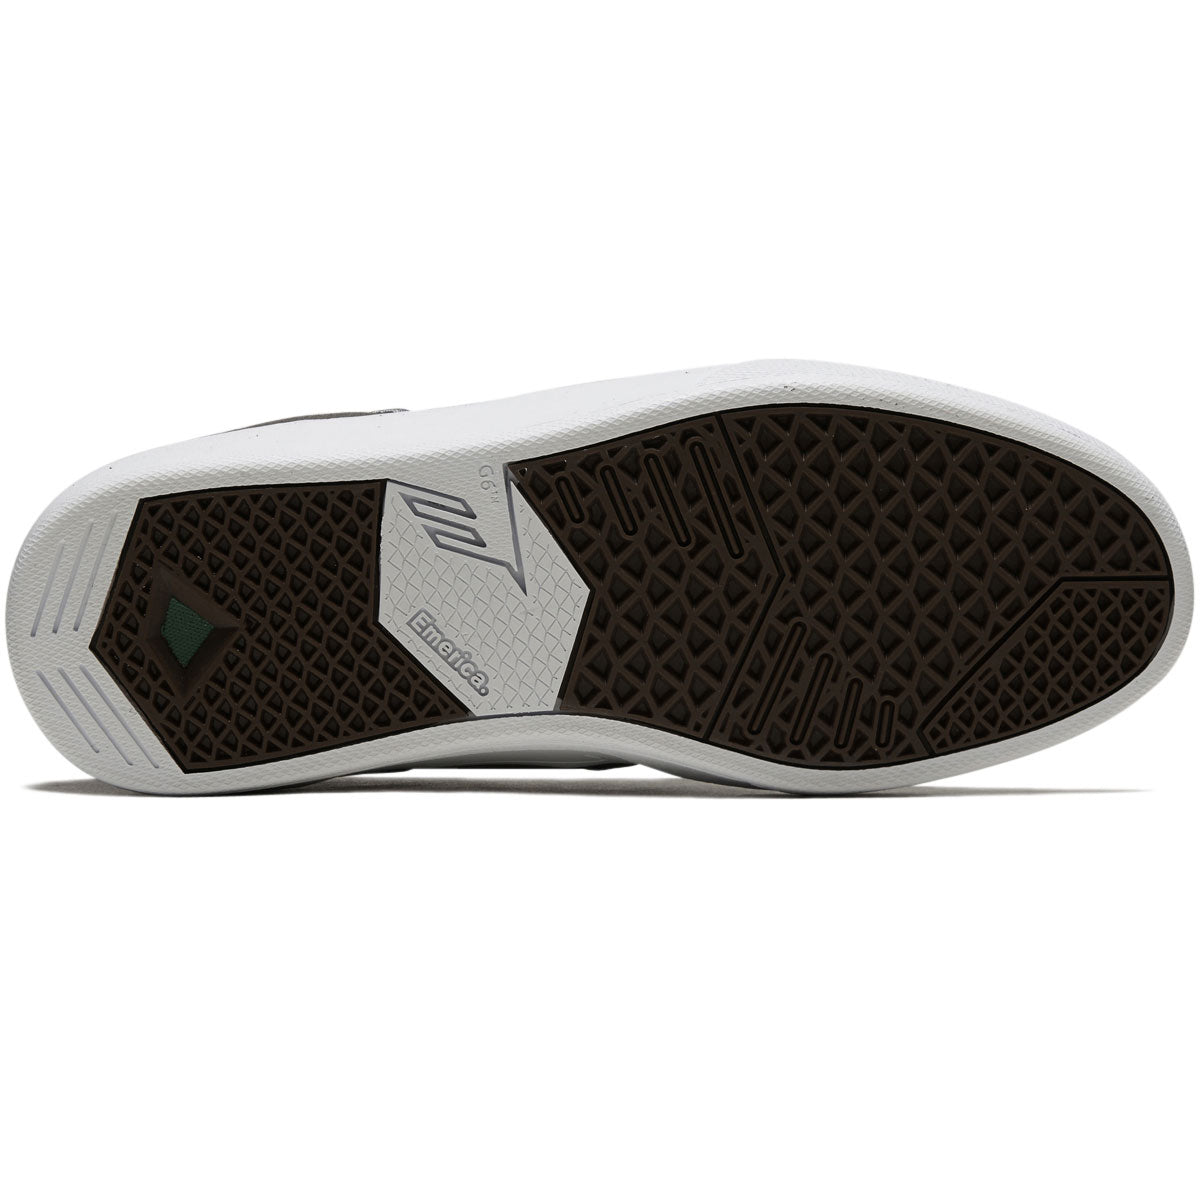 Emerica Figgy G6 Shoes - Grey image 4